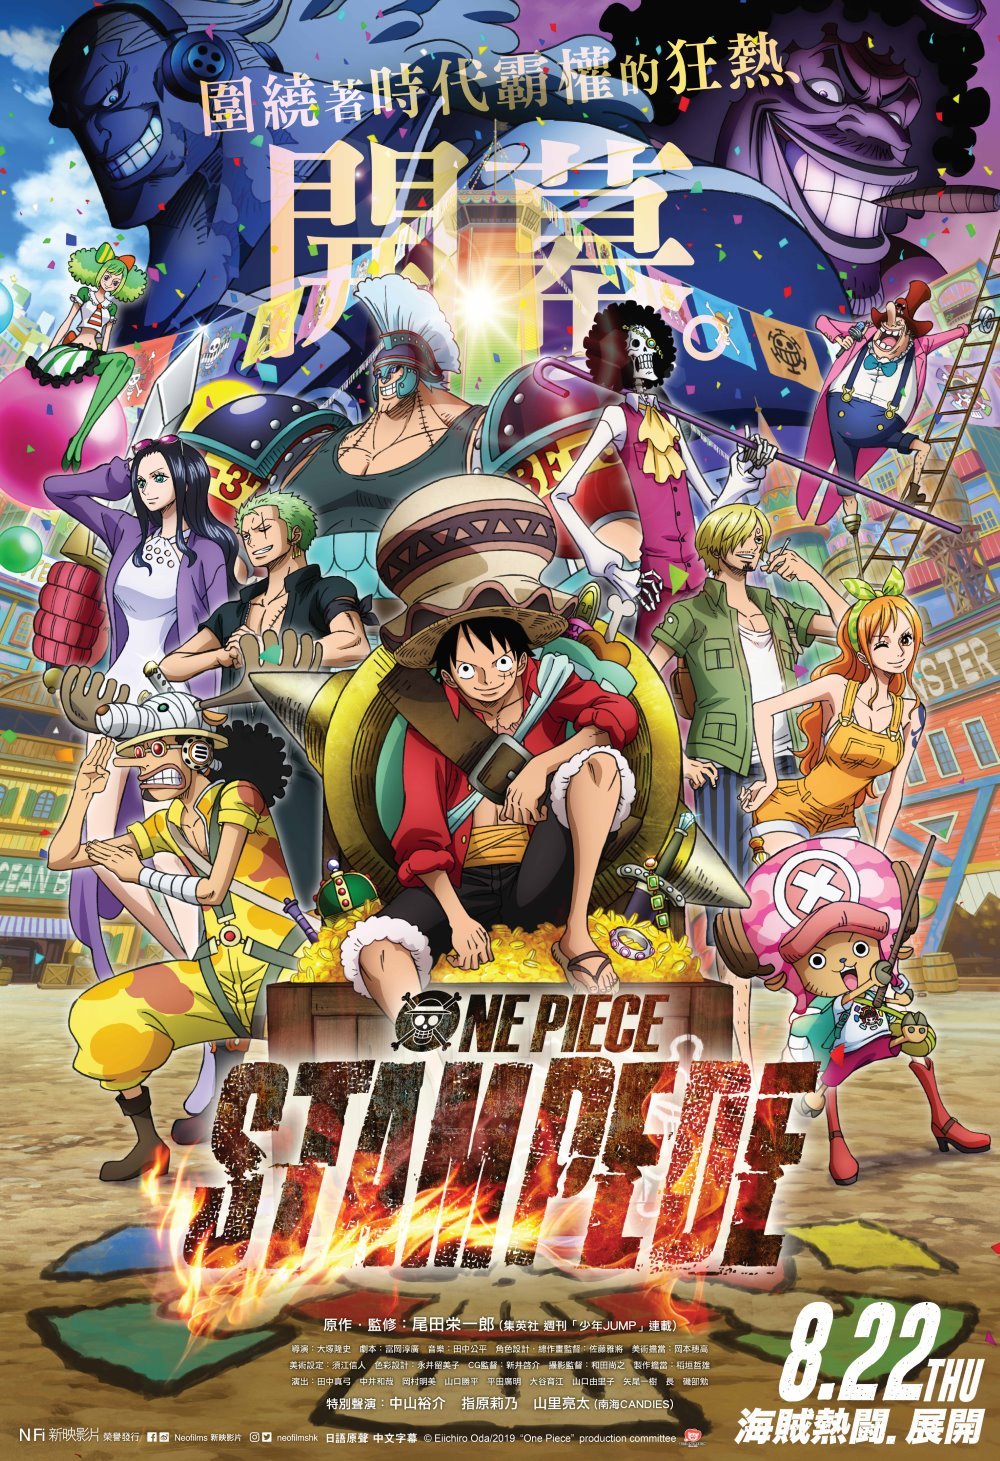 One Piece: Stampede電影圖片 - ONEPIECESTAMPEDE_Keyart_1563415221.jpg